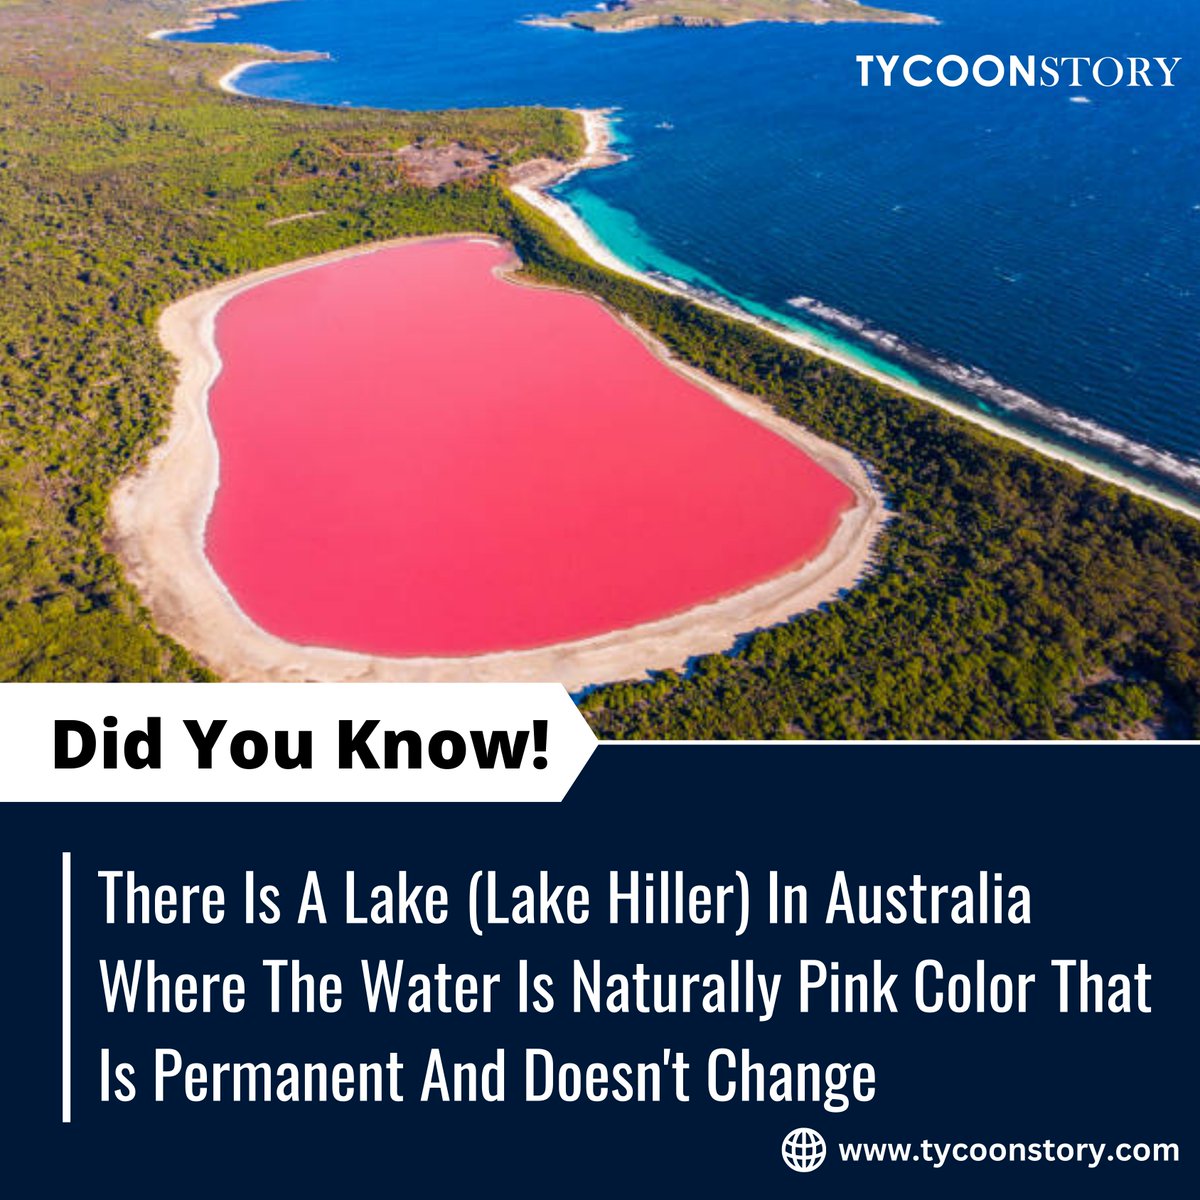 Explore the Beauty of Pink Lake Hillier: Australia

#LakeHillier #PinkLake #WesternAustralia #NaturalWonder #TravelAustralia #ExploreWA #PinkWater #TravelBucketList #ScenicFlights #NatureLovers @TycoonStoryCo @tycoonstory2020 @timesofindia @Australia